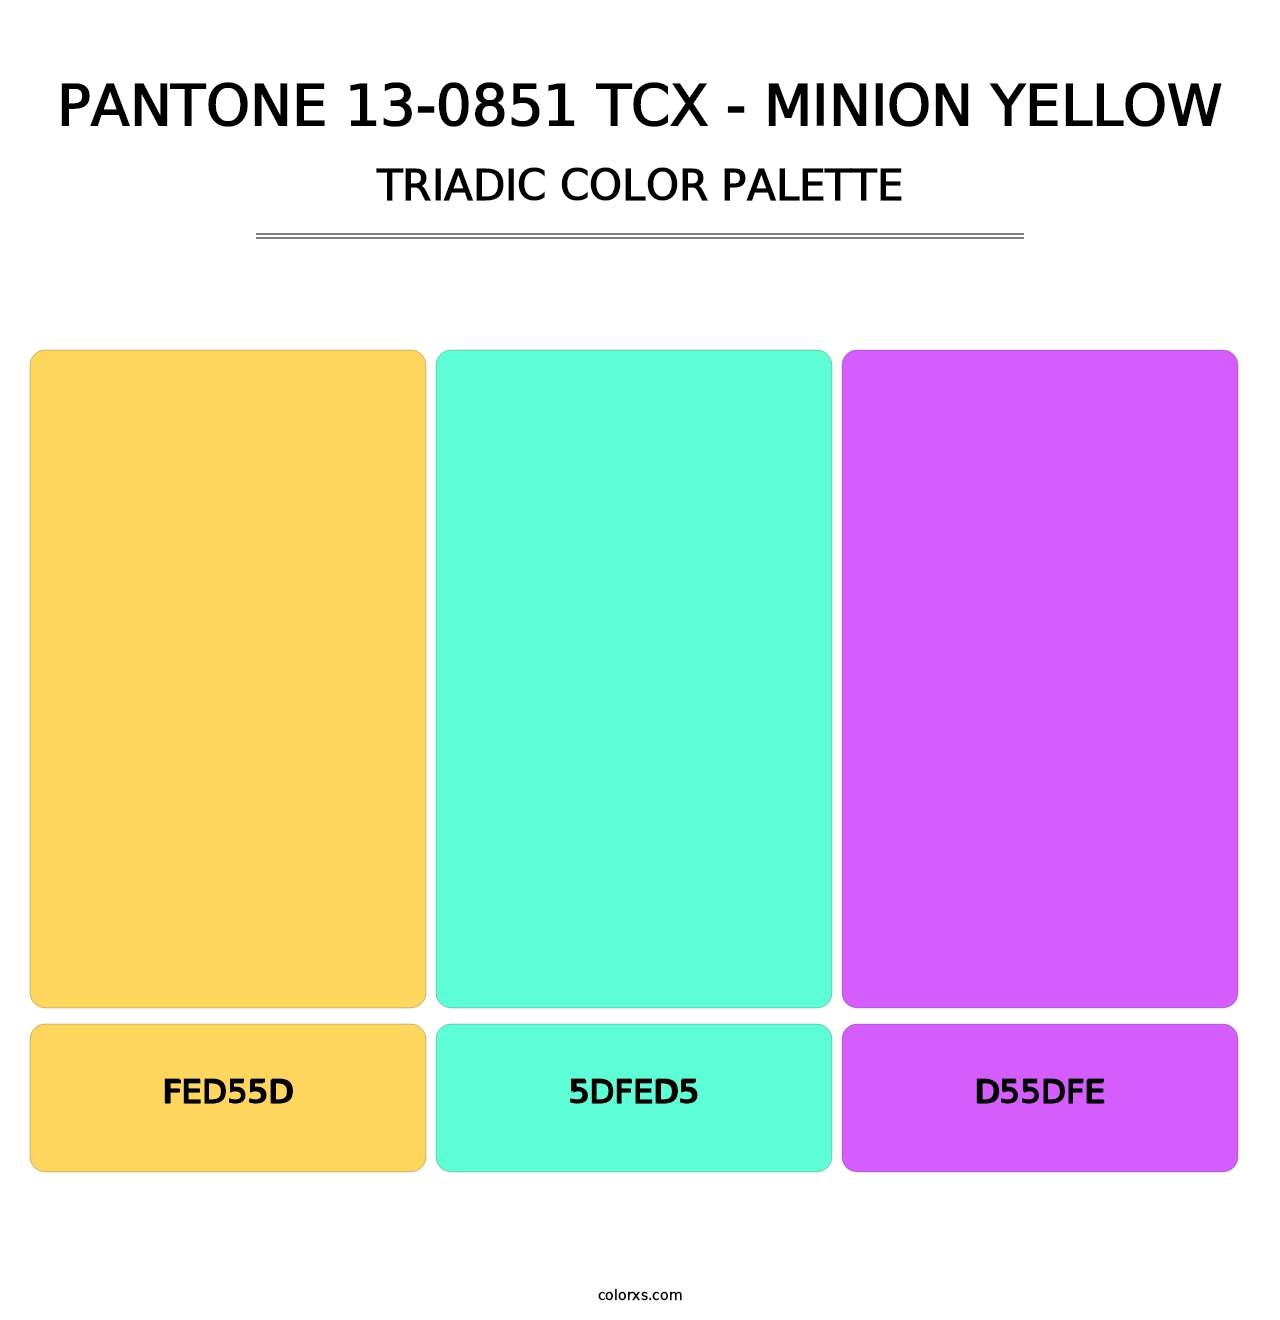 PANTONE 13-0851 TCX - Minion Yellow - Triadic Color Palette